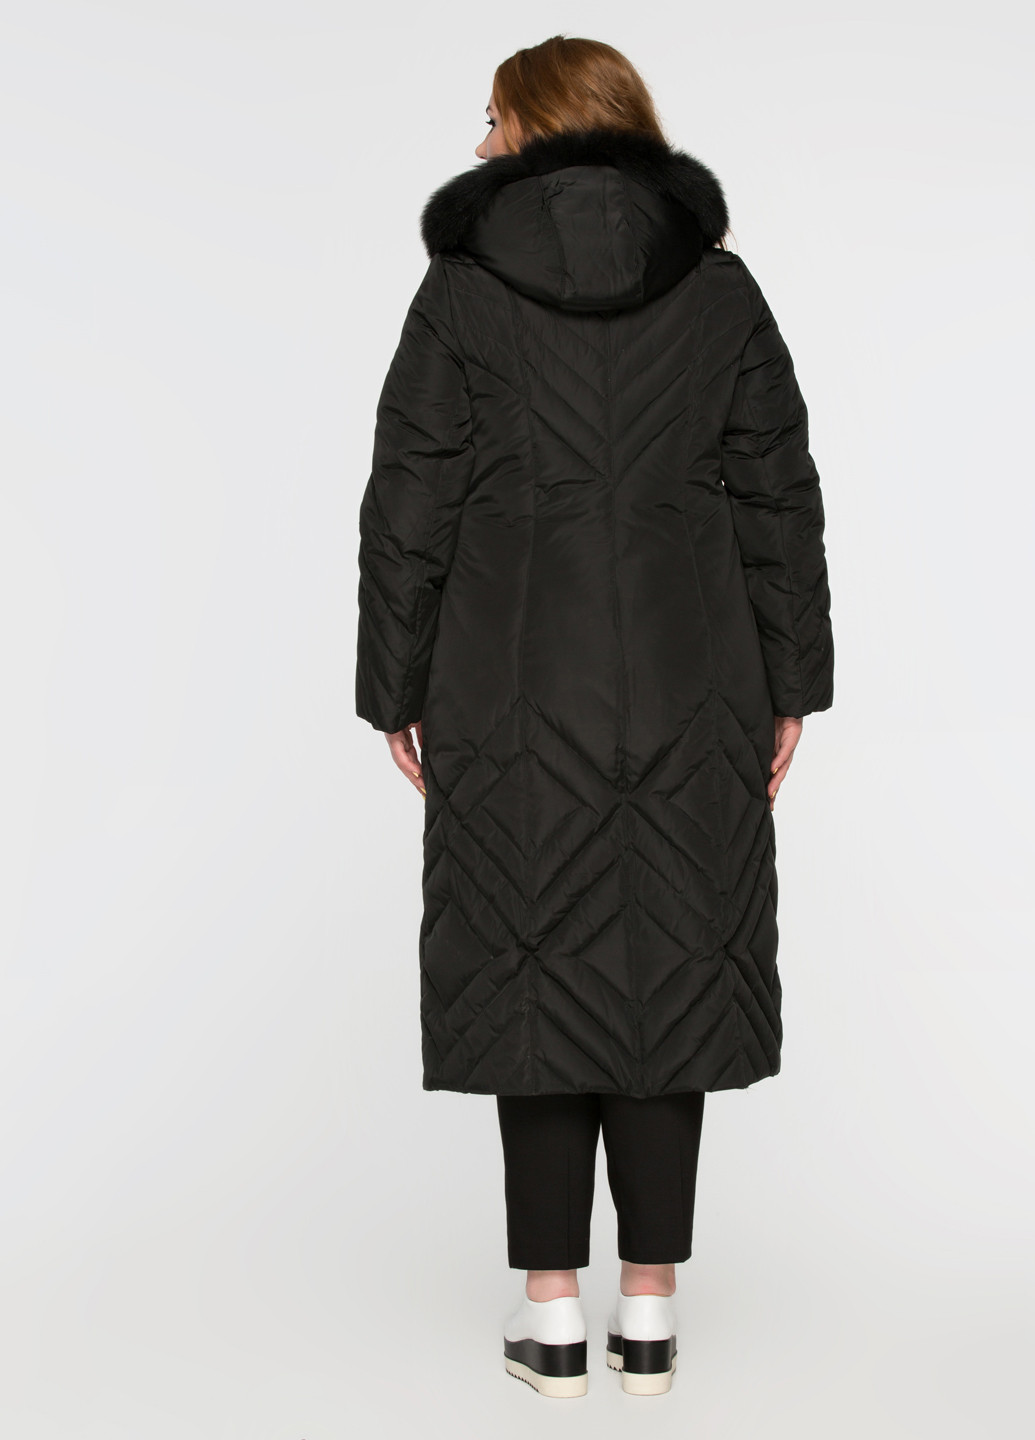 Черная зимняя длинное пальто на пуху Mangust